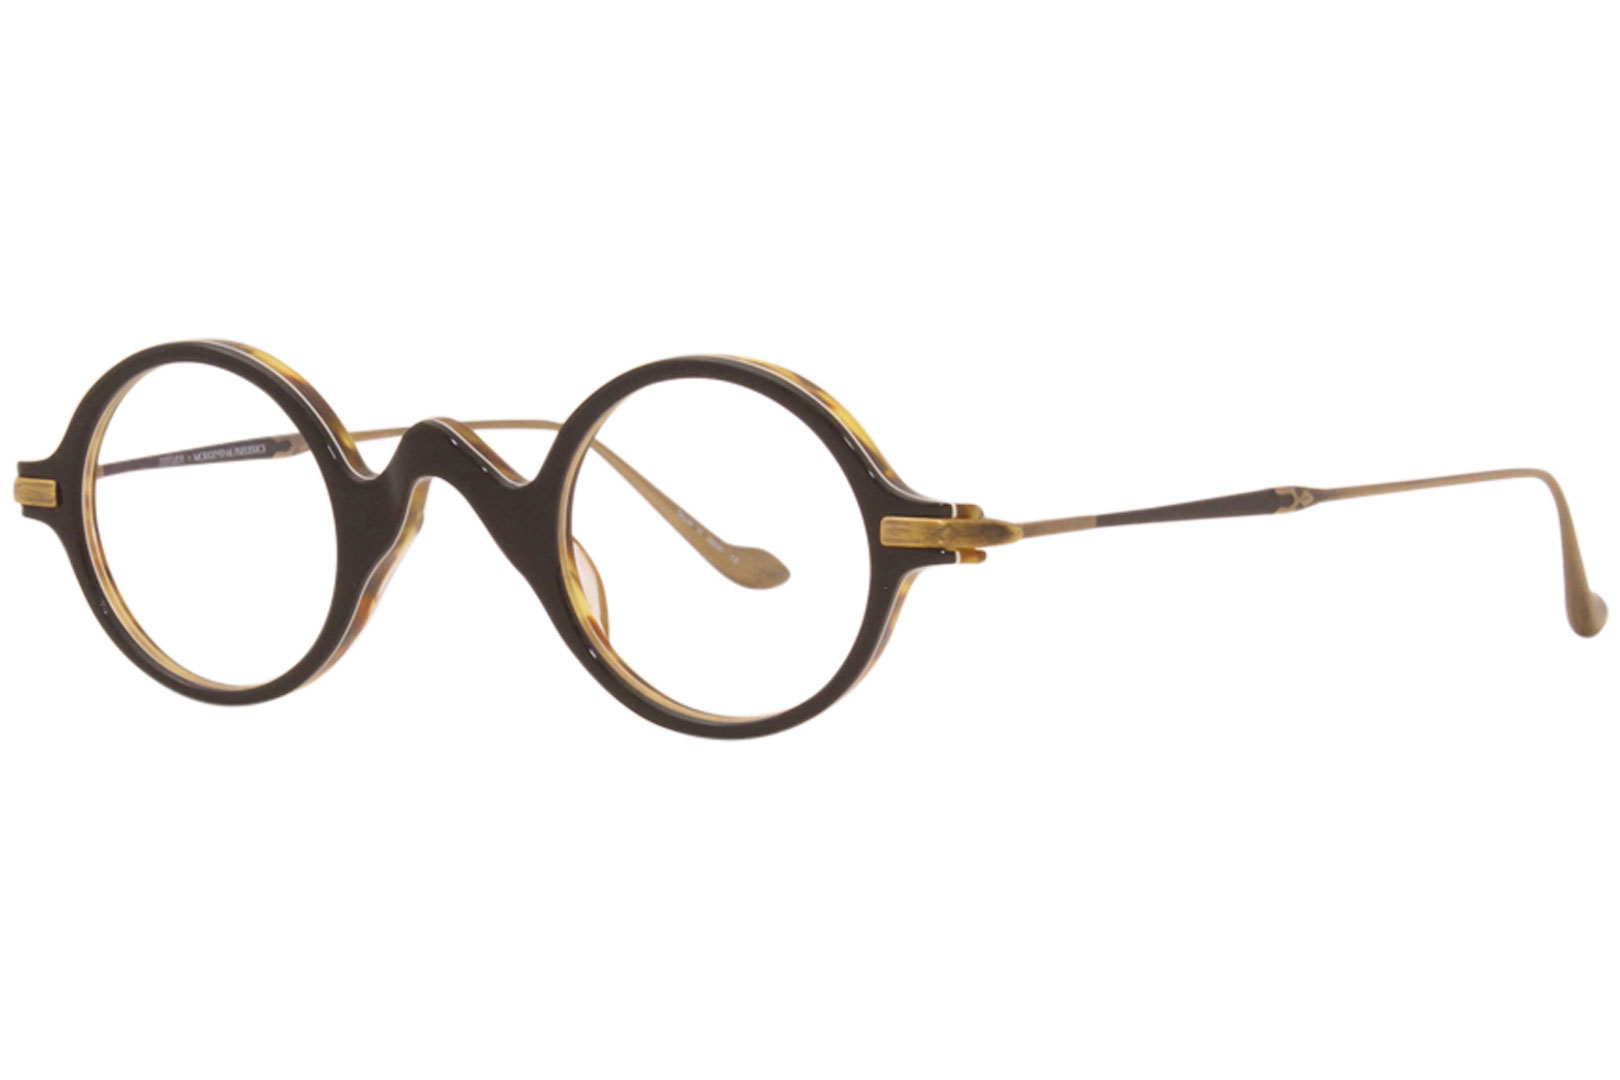 Matsuda x Morgenthal Frederics The-Lifesaver MXMF1 Eyeglasses Optical Frame